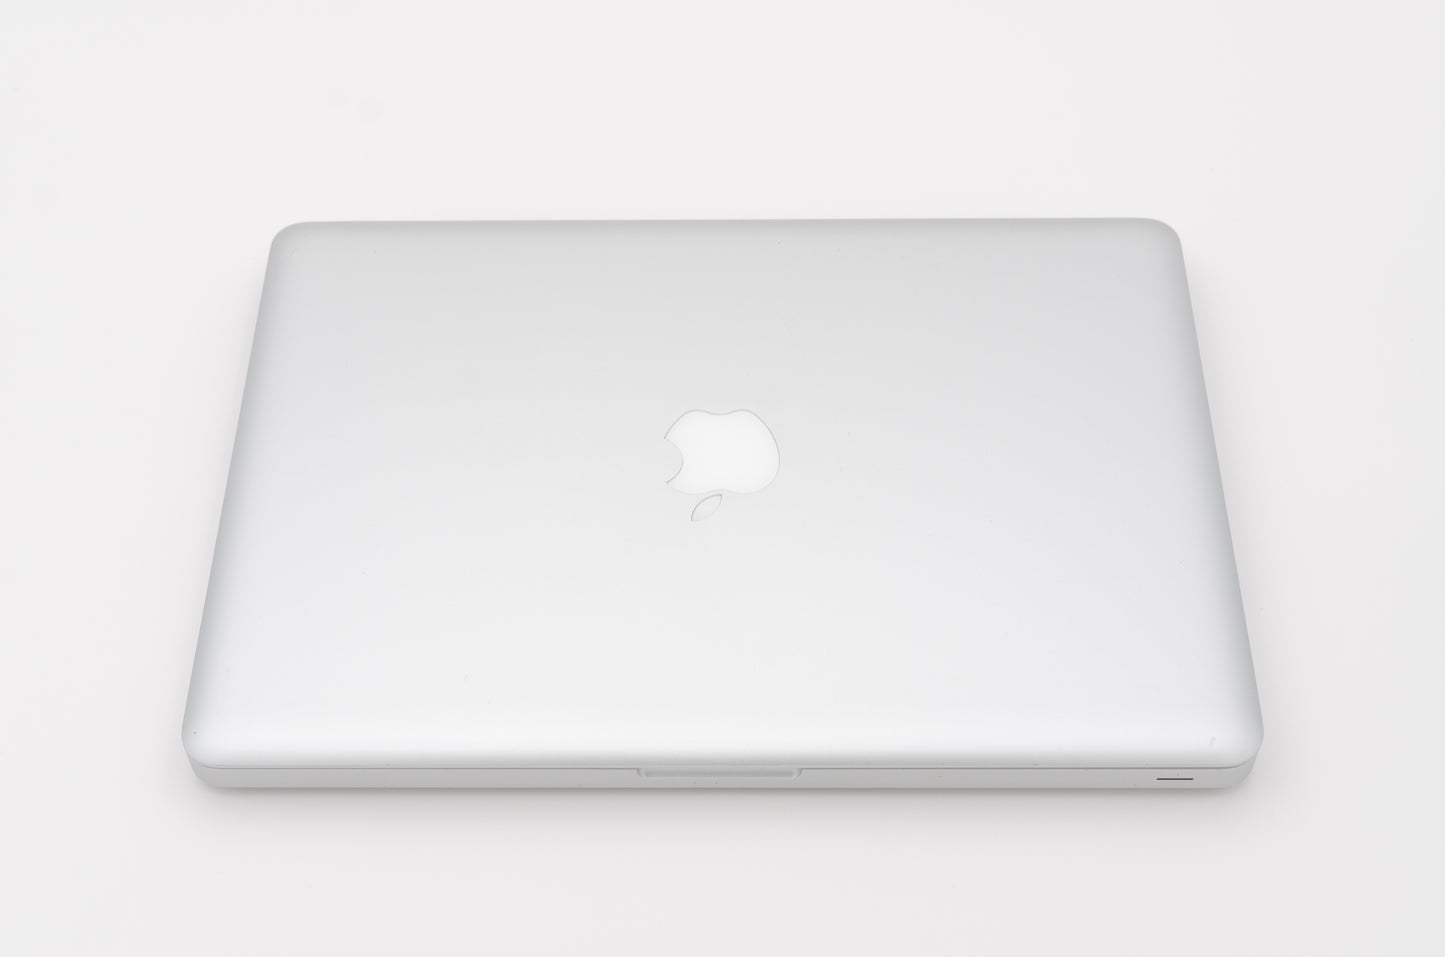 apple-early-2011-13.3-inch-macbook-pro-a1278-aluminum-dci5 - 2.3ghz processor, 4gb ram, hd 3000 - 348mb gpu-mc700ll/a-3